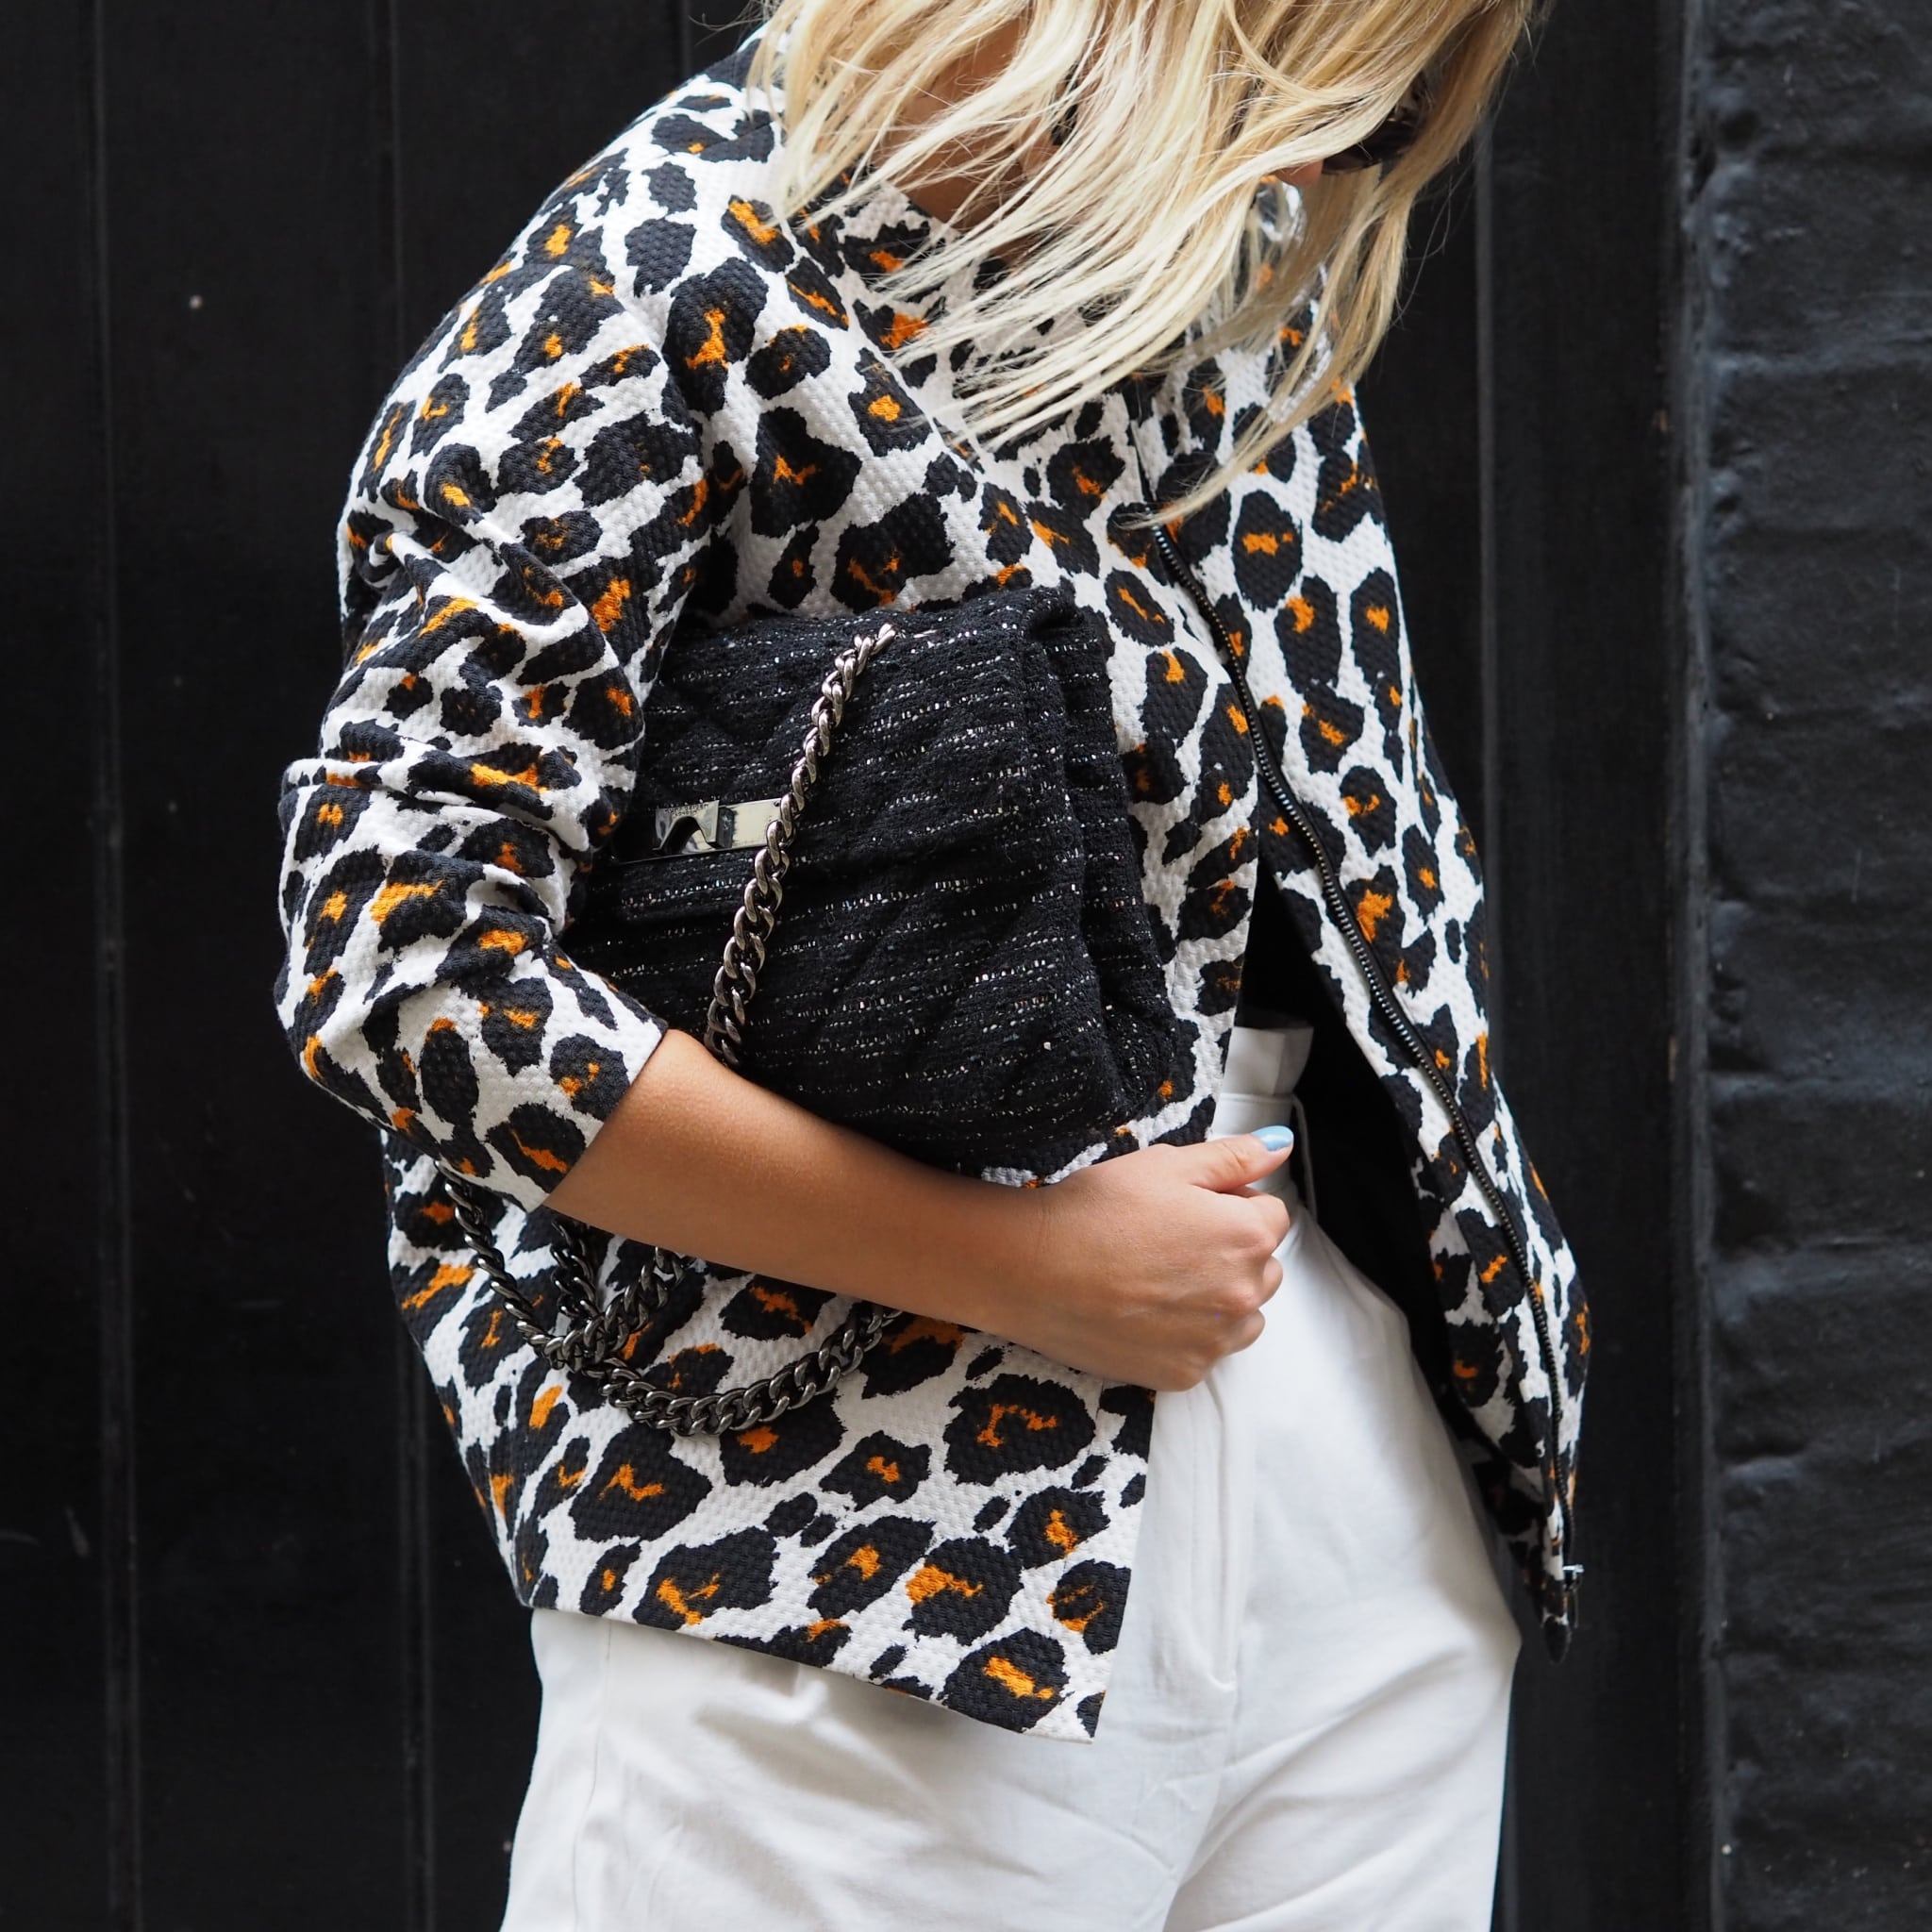 Street Style London Fashion blogger